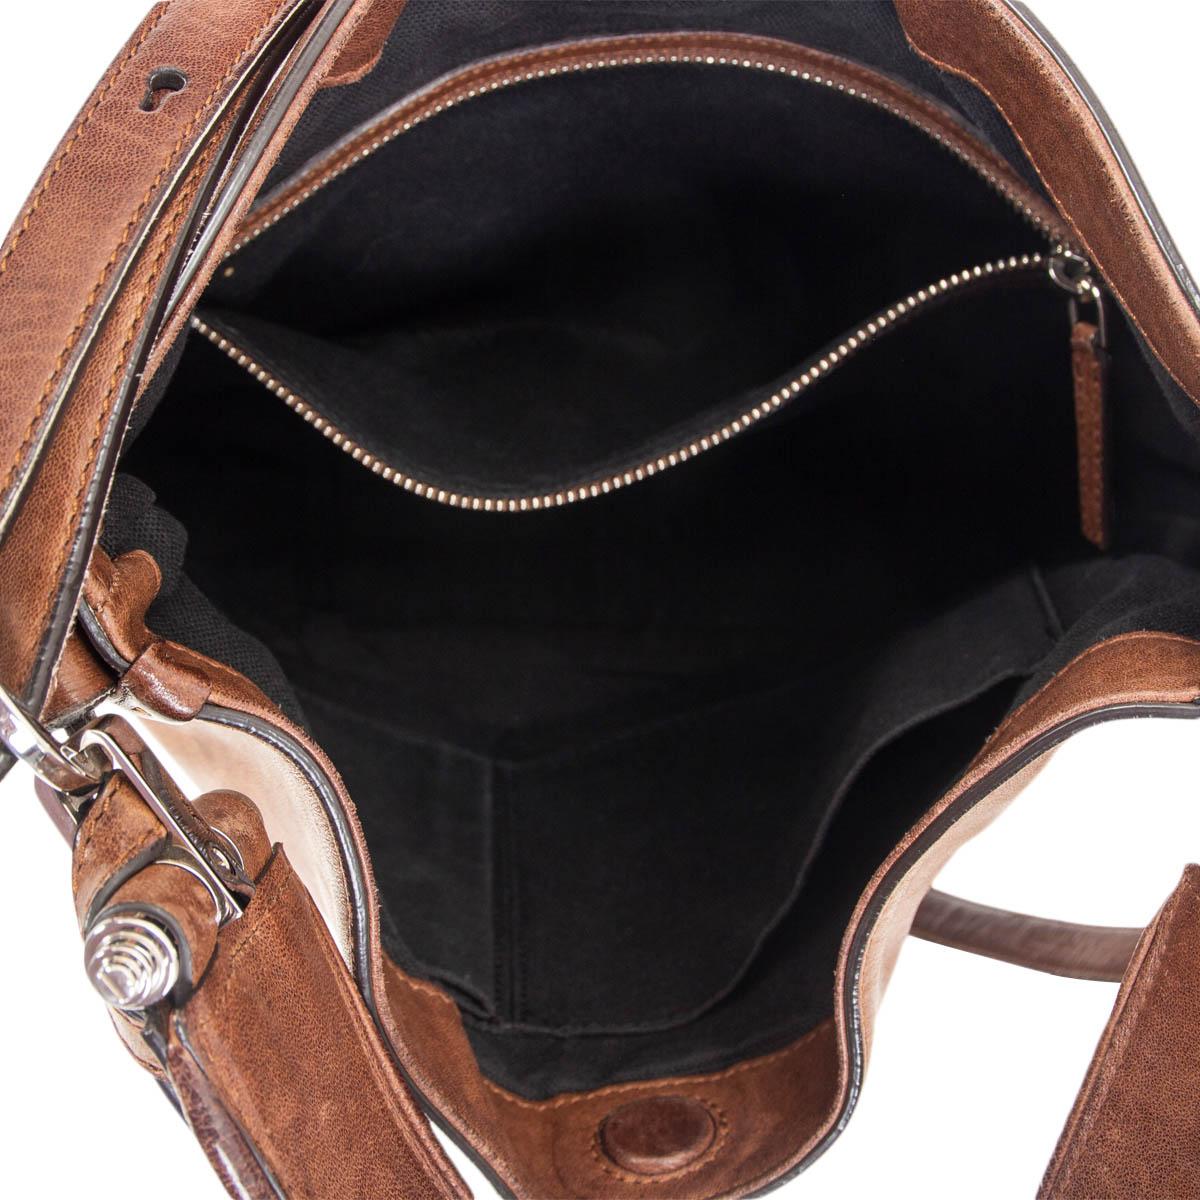 chocolate brown leather shoulder bag